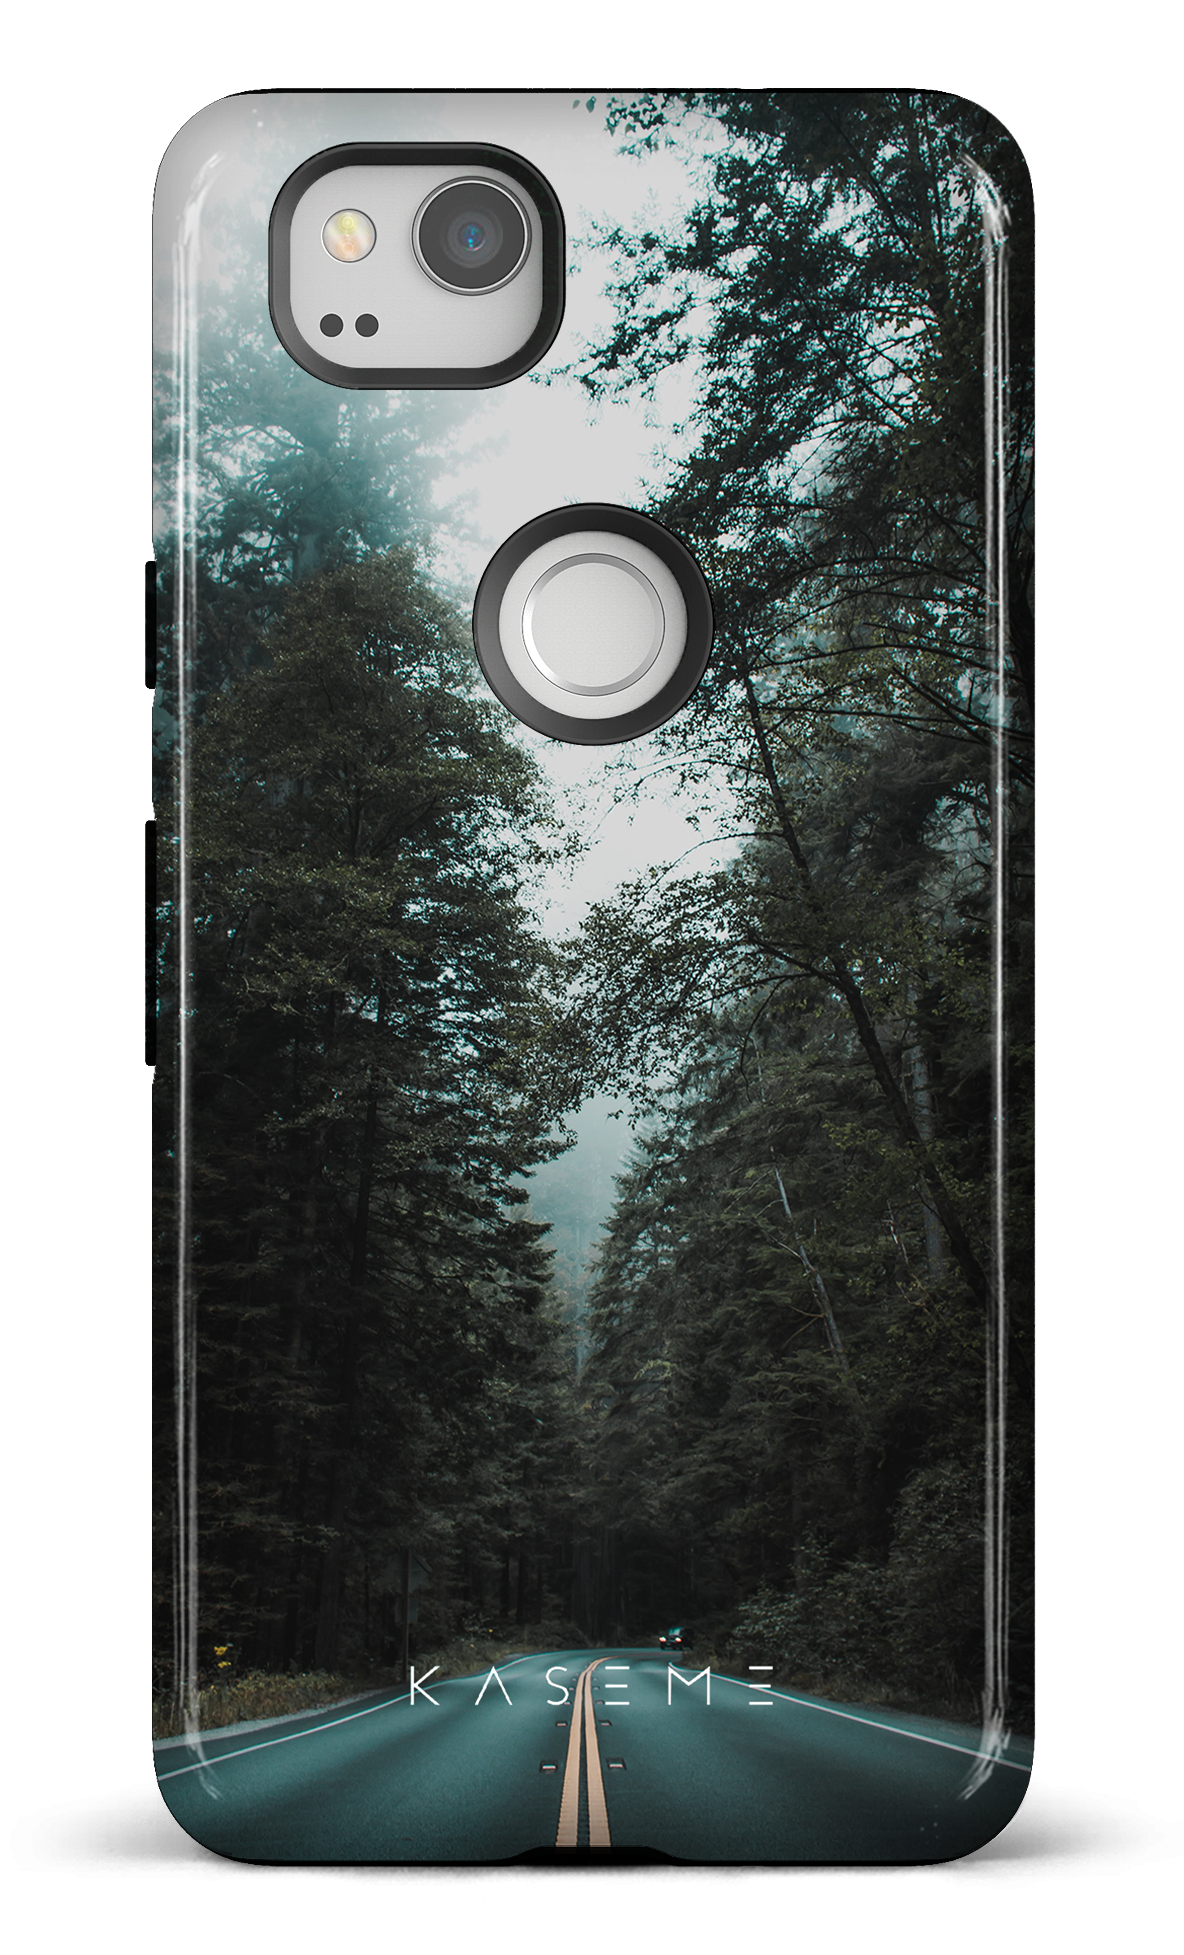 Sequoia - Google Pixel 2